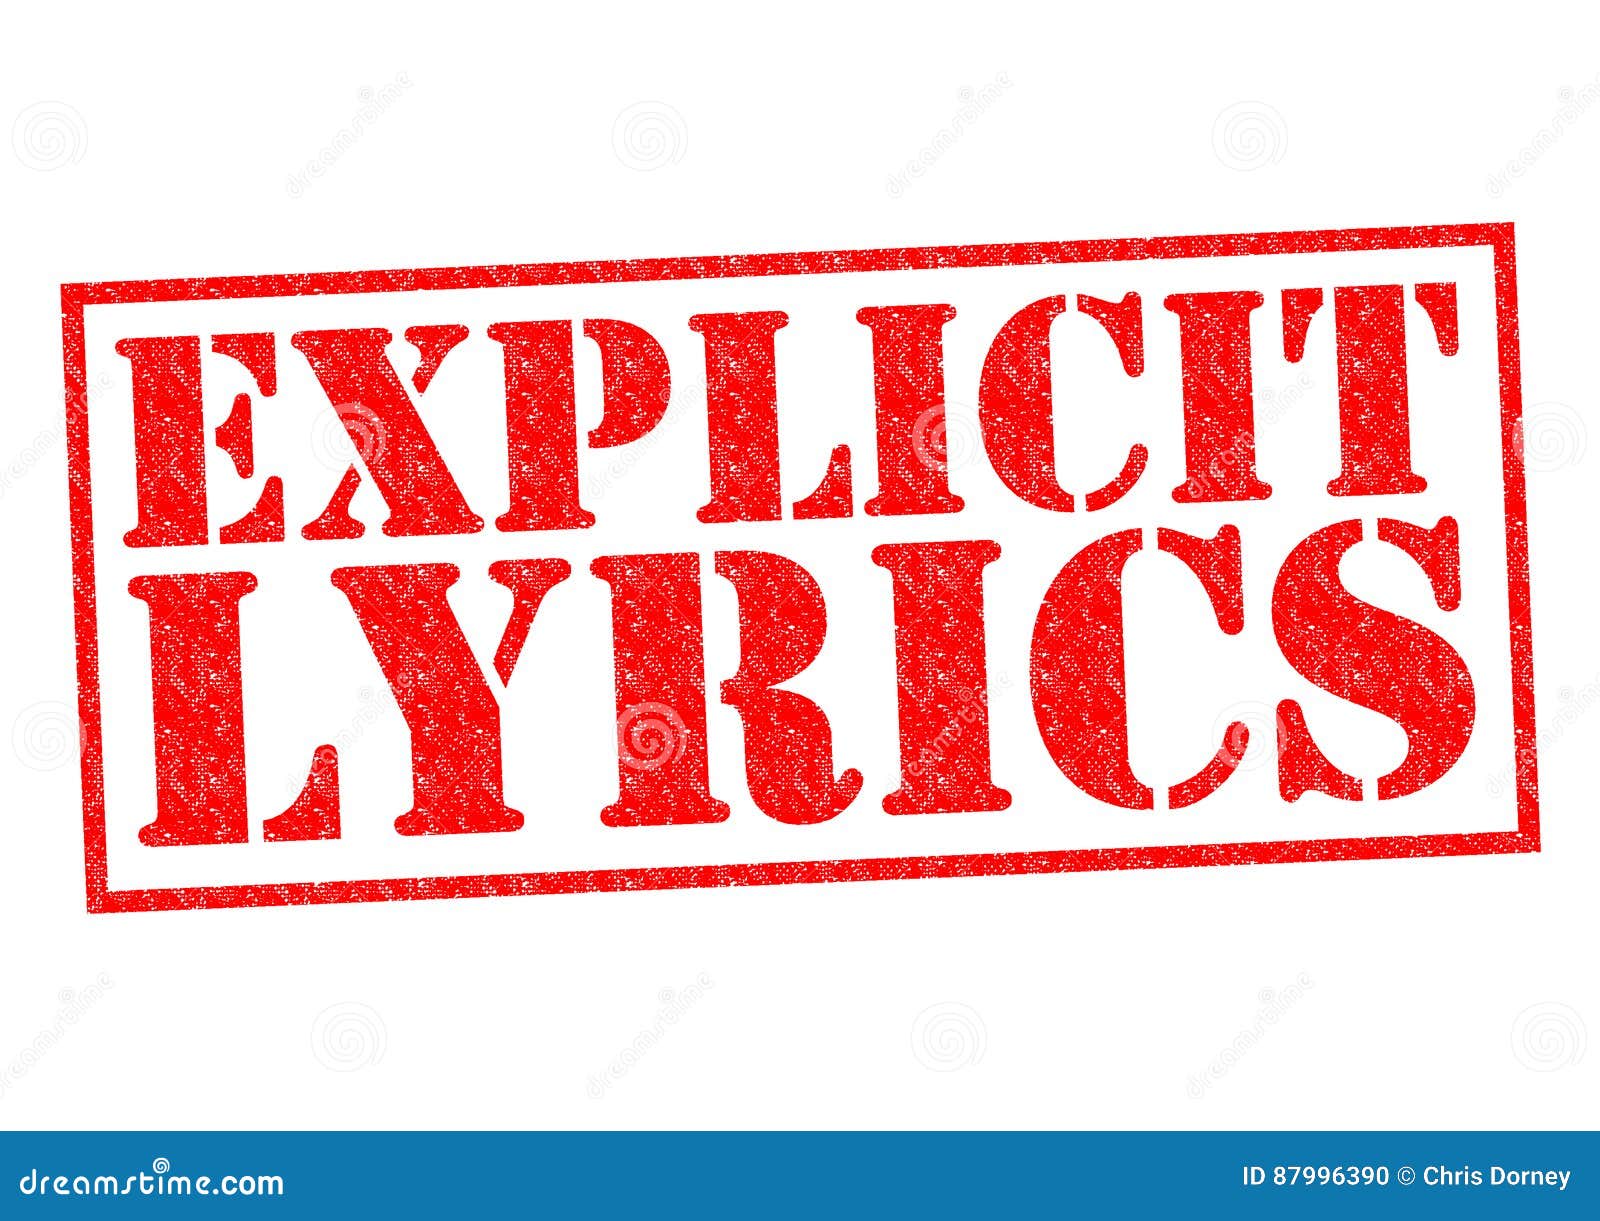 explicit lyrics